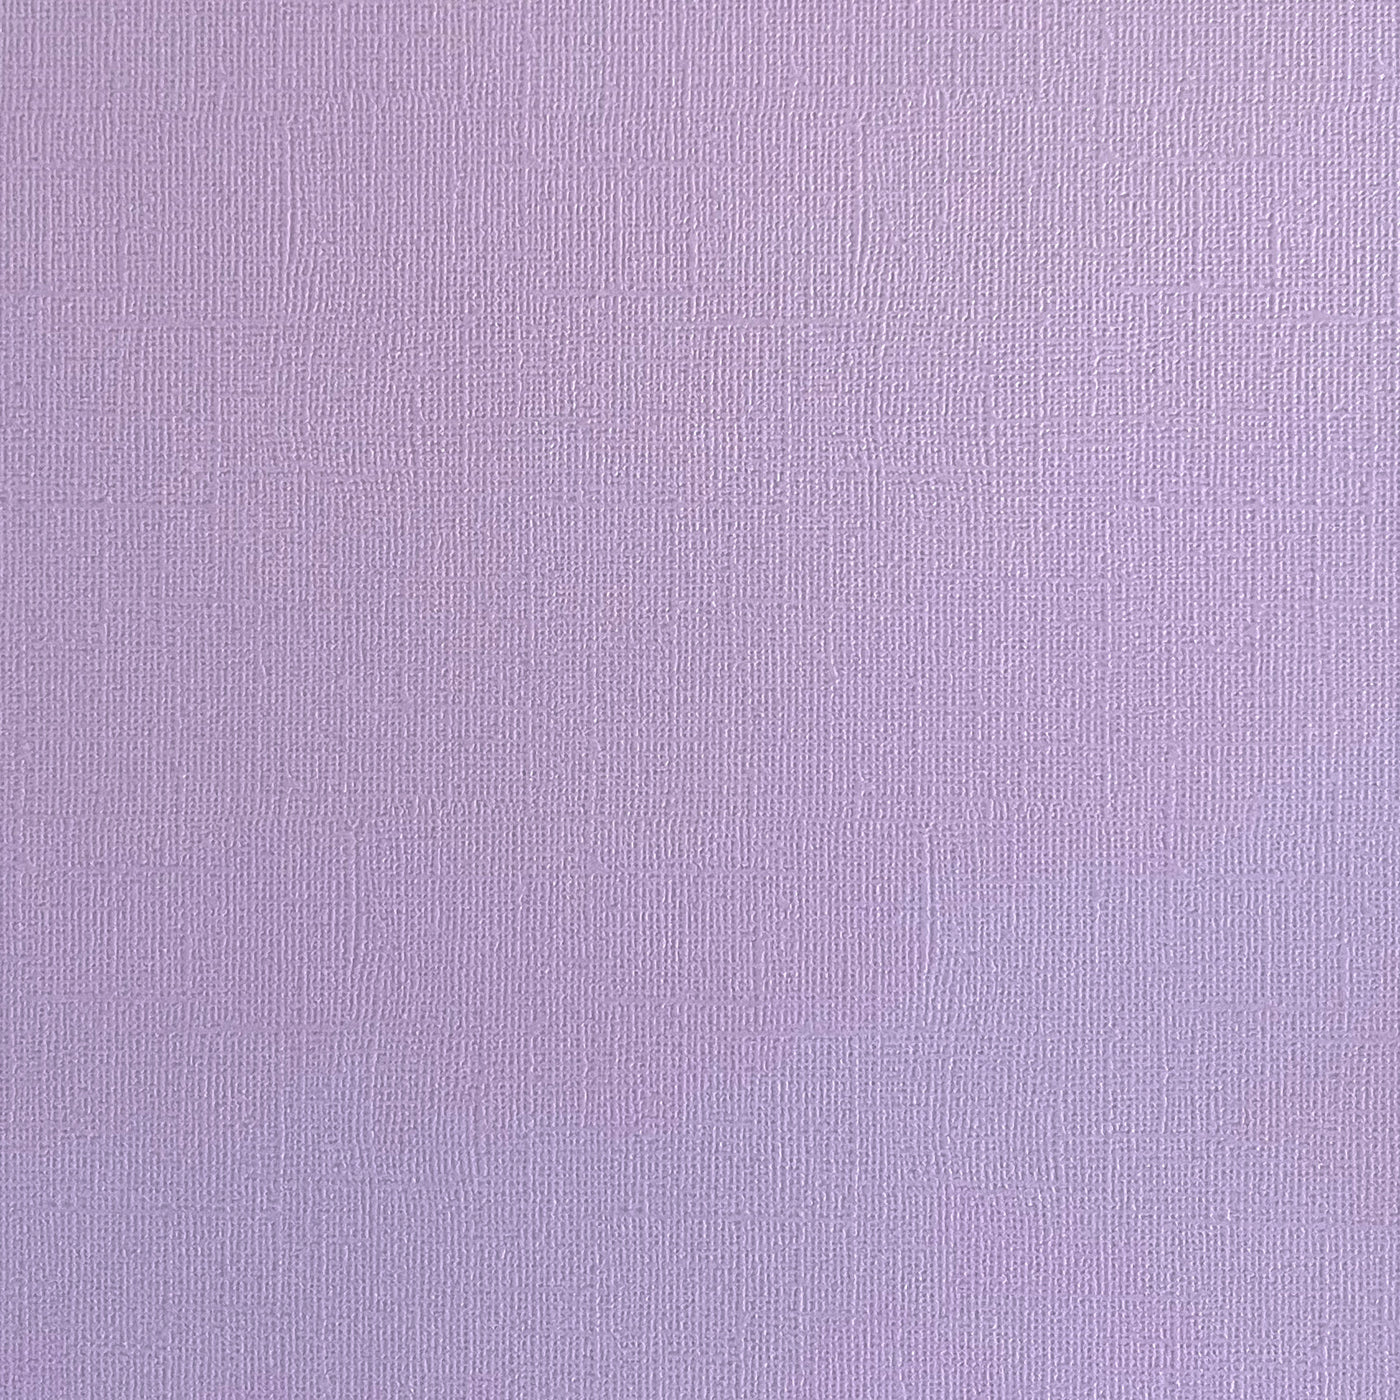 LARKSPUR - Violet Textured 12x12 Cardstock - Encore Paper